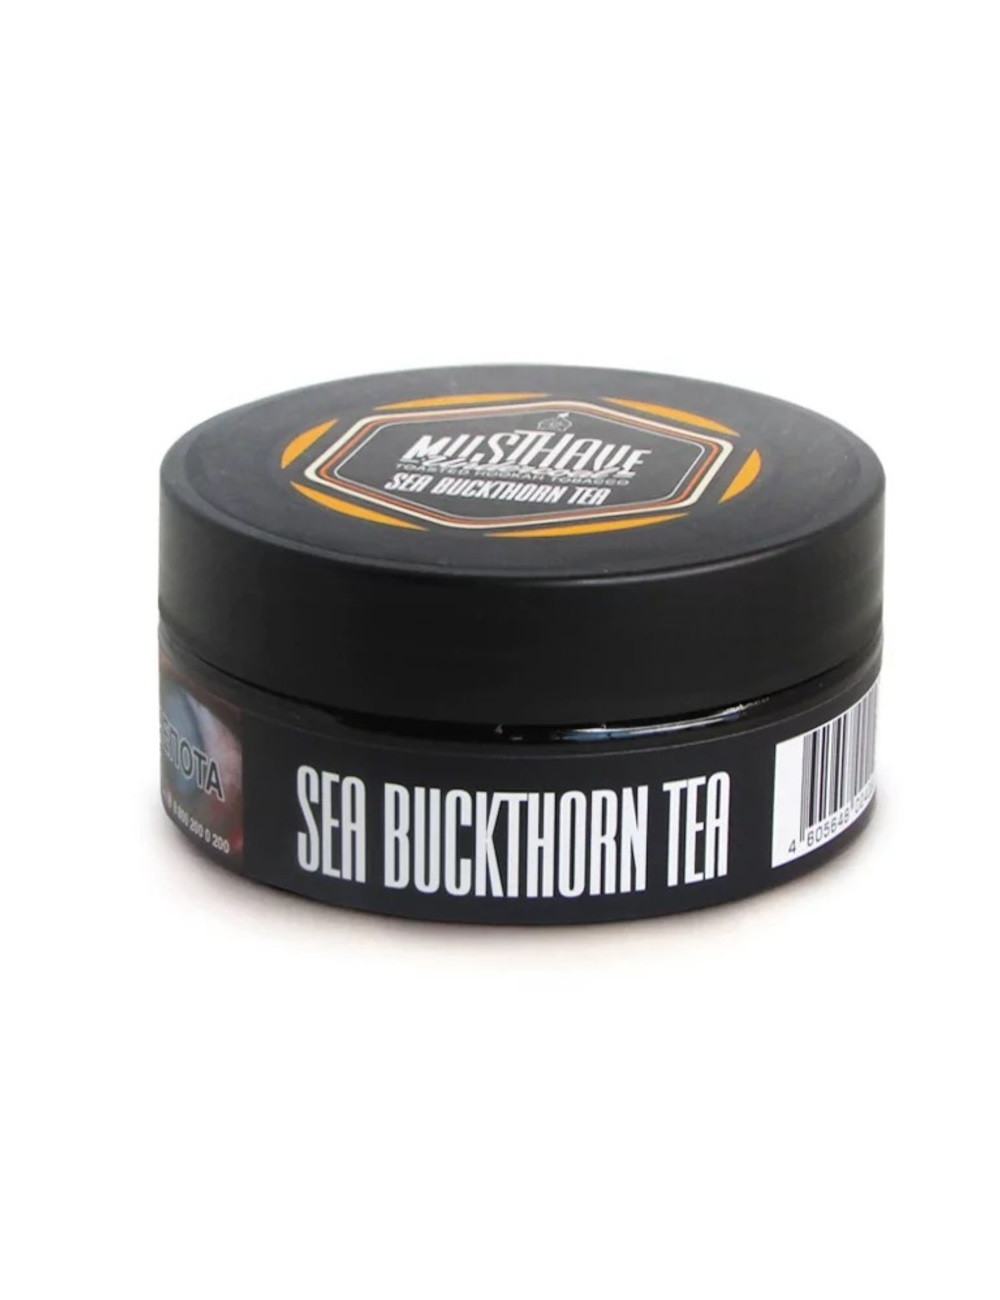 Sea buckthorn tea